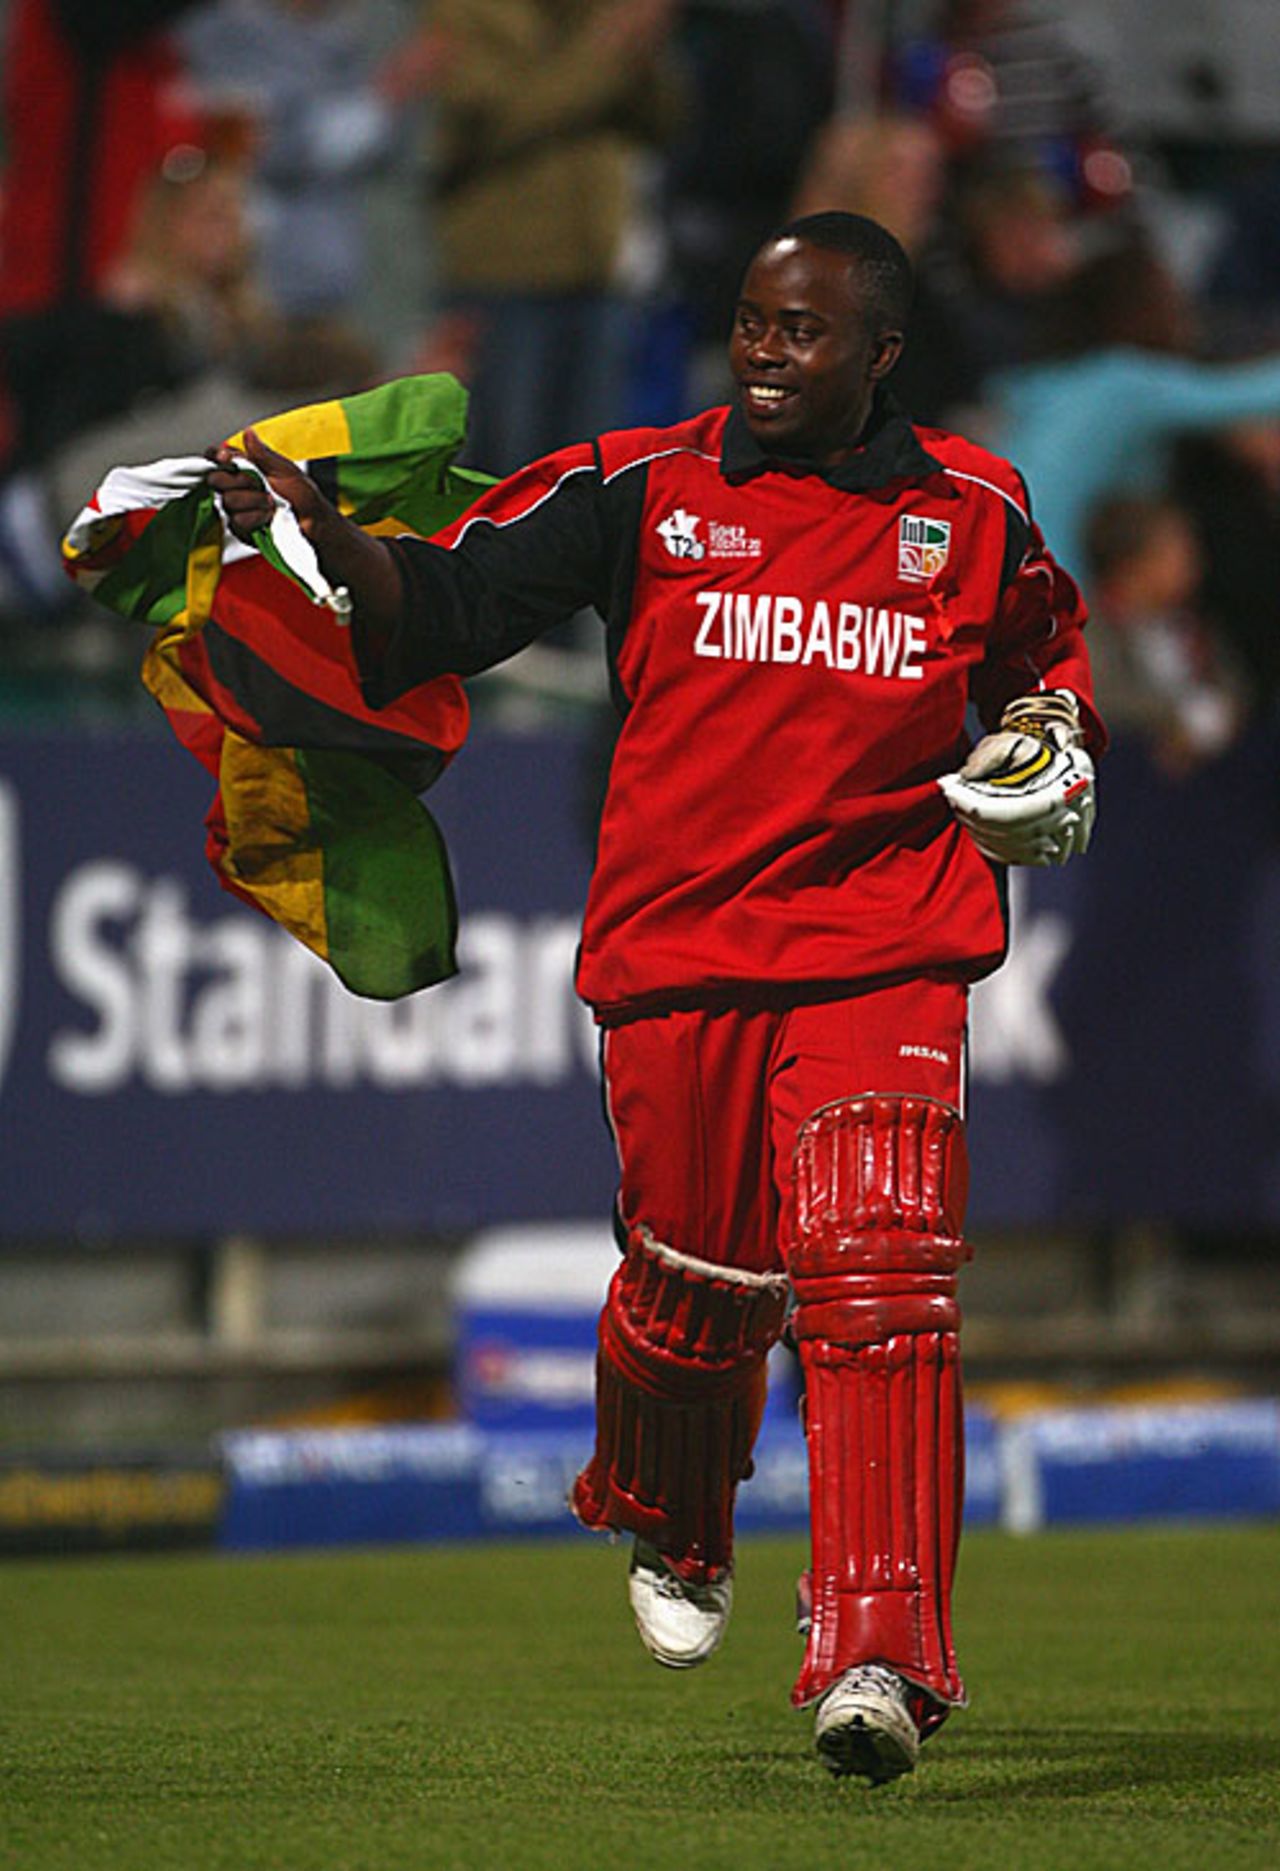 Prosper Utseya, the Zimbabwe captain, runs onto the field with the national flag, Australia v Zimbabwe, Group B, ICC World Twent20, Cape Town, September 12, 2007